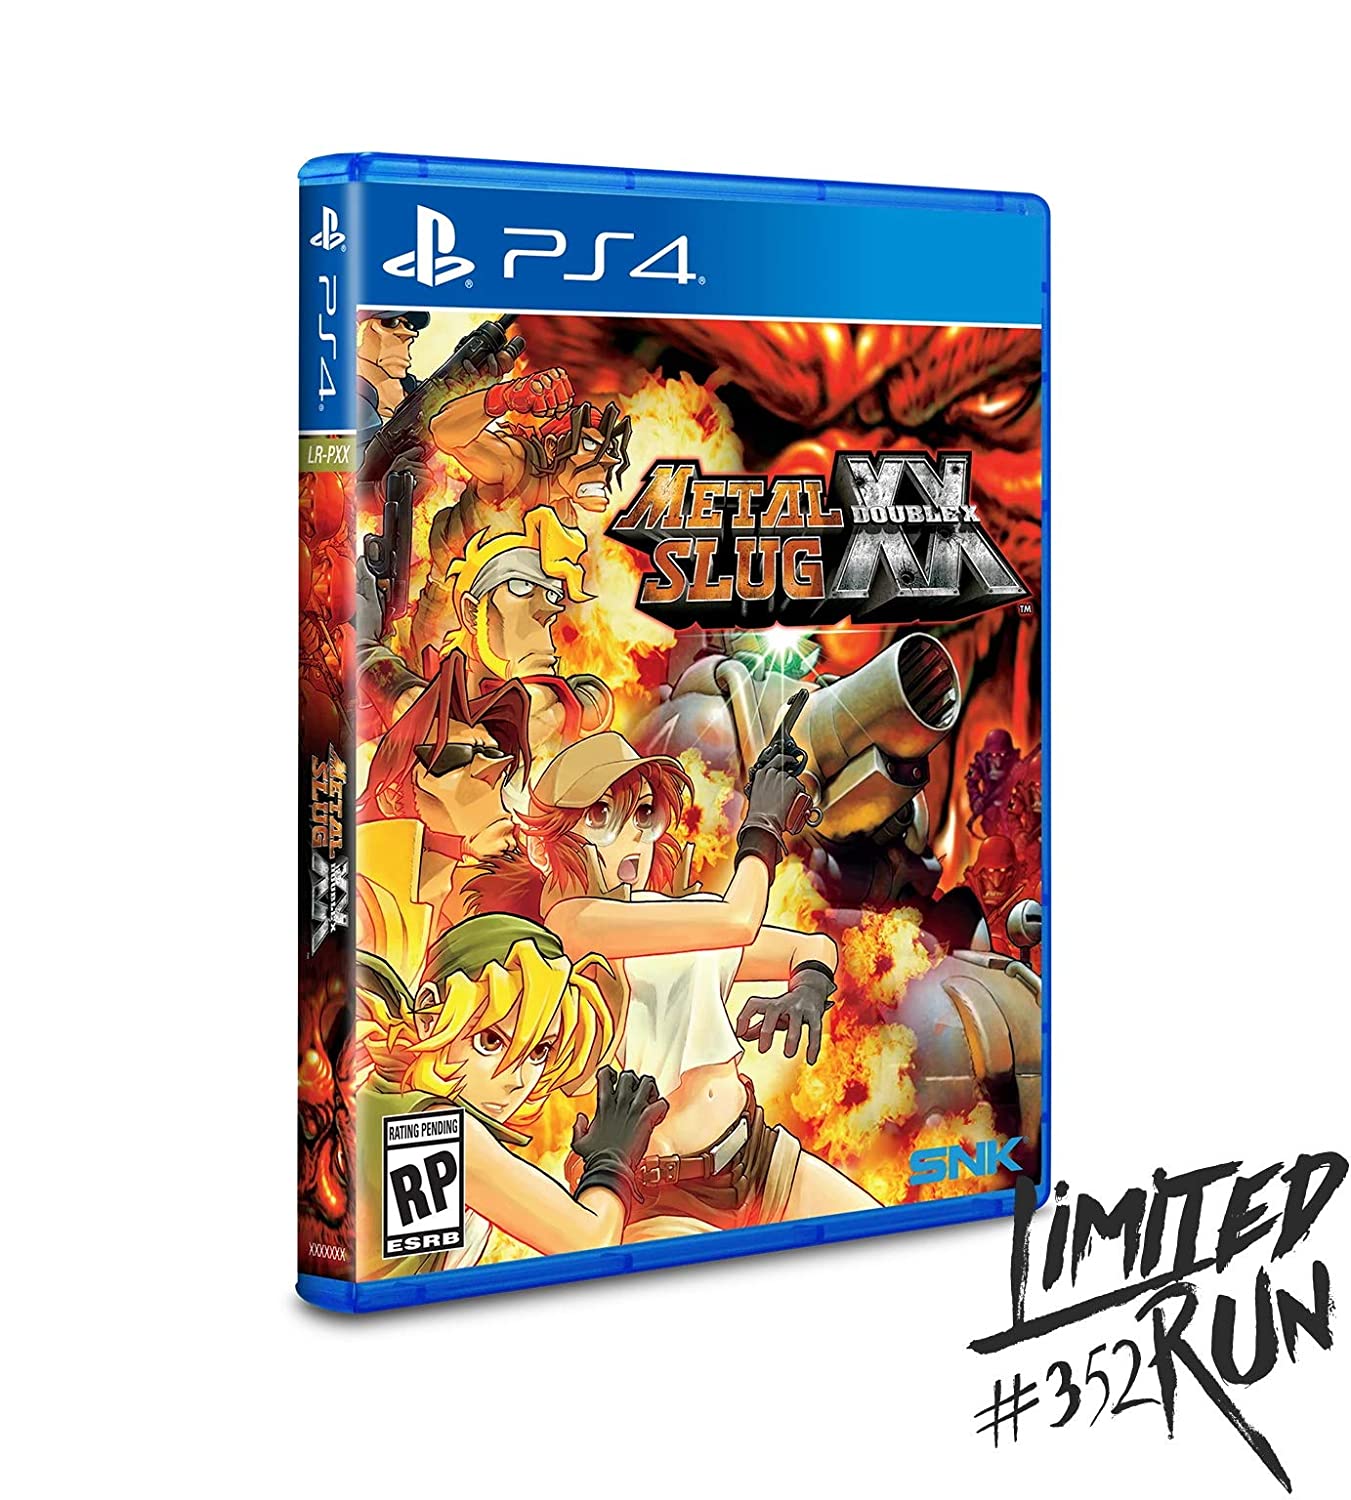 Metal Slug XX (Limited Run #352) - (PS4) Playstation 4 Video Games Limited Run Games   